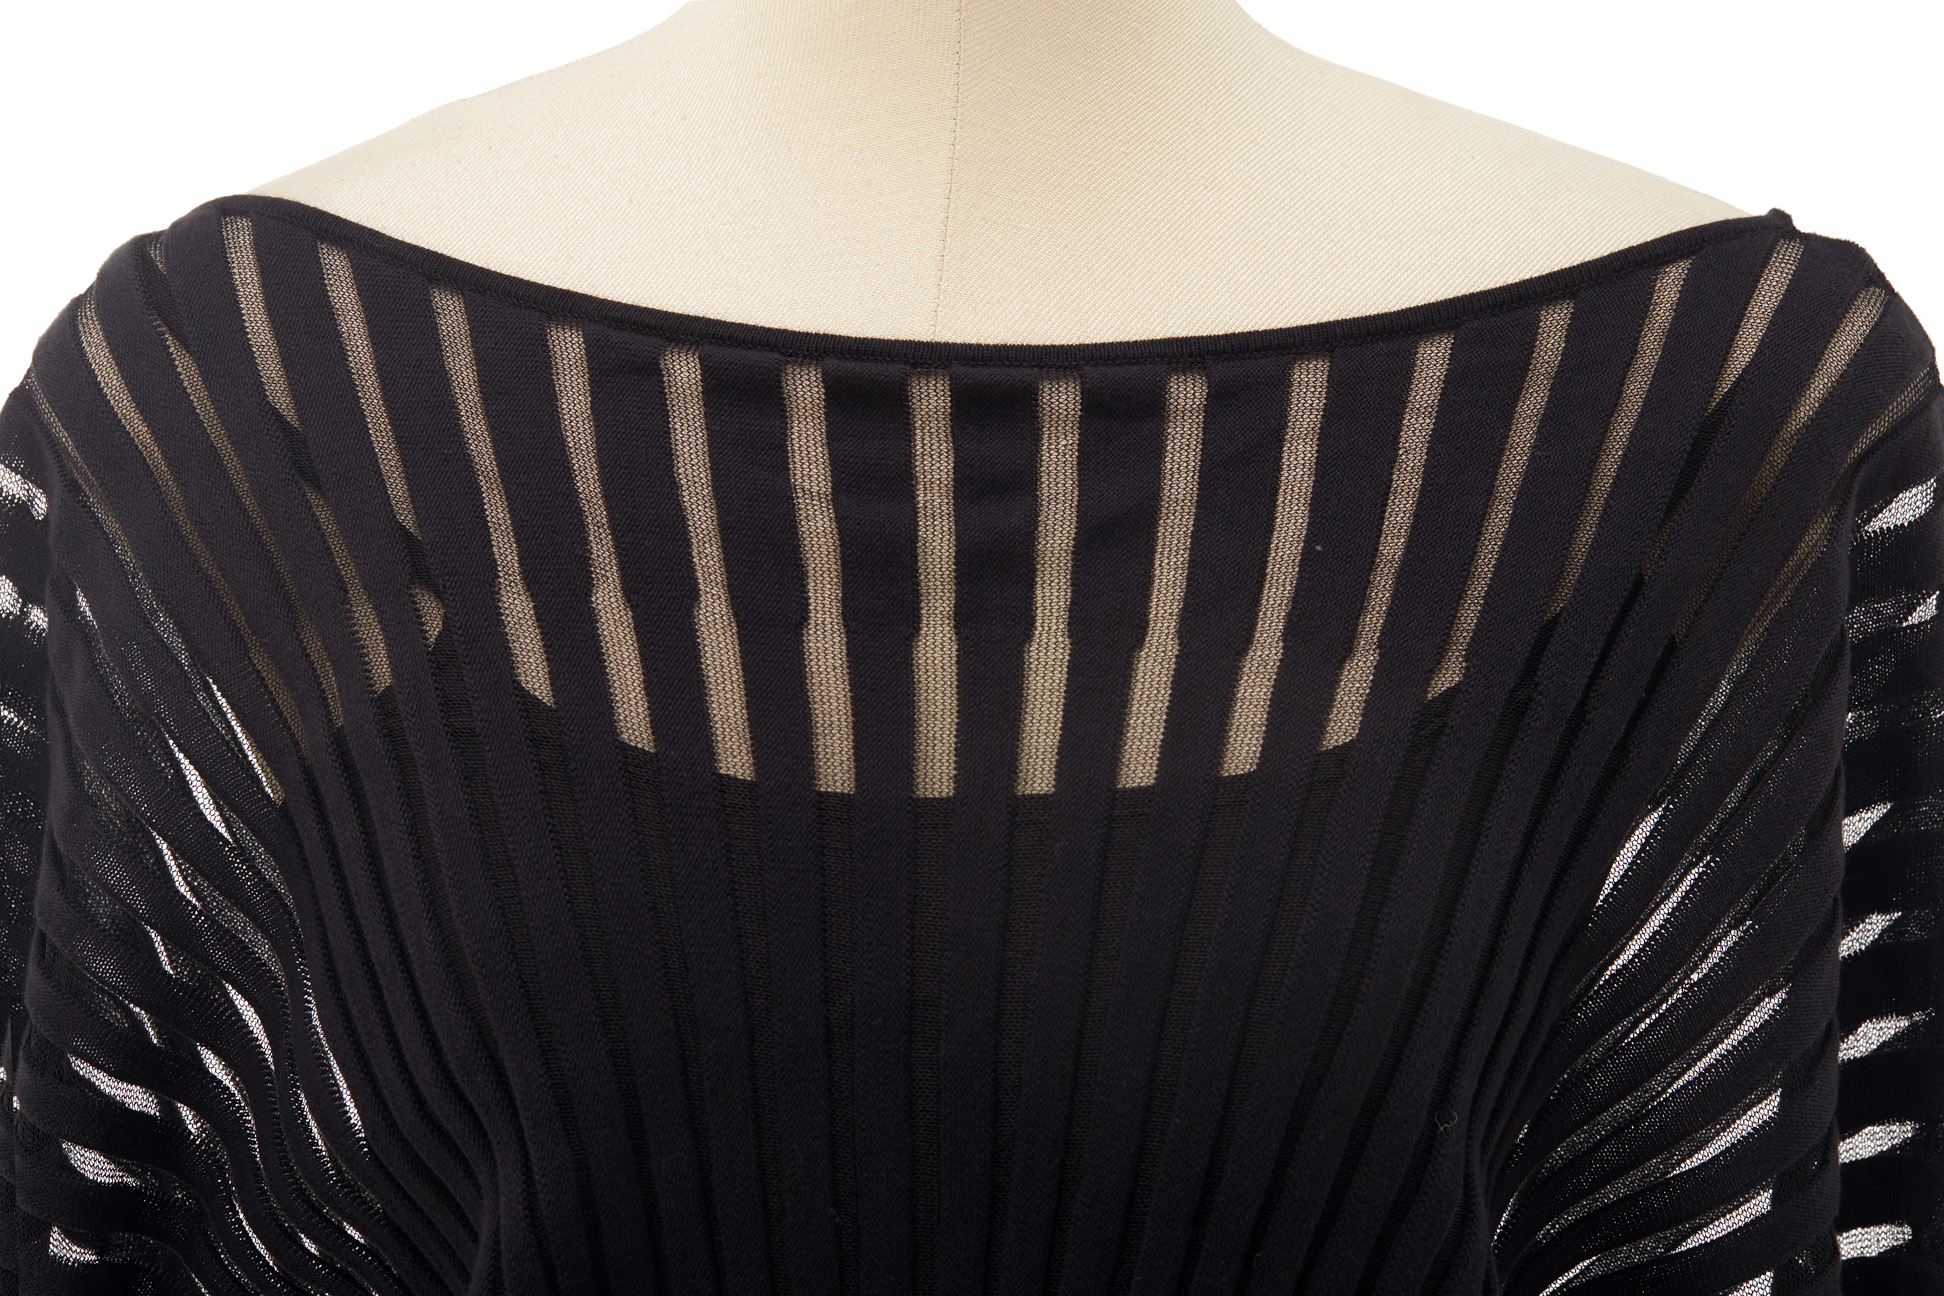 A TRINA TURK BLACK DRESS - Image 2 of 3